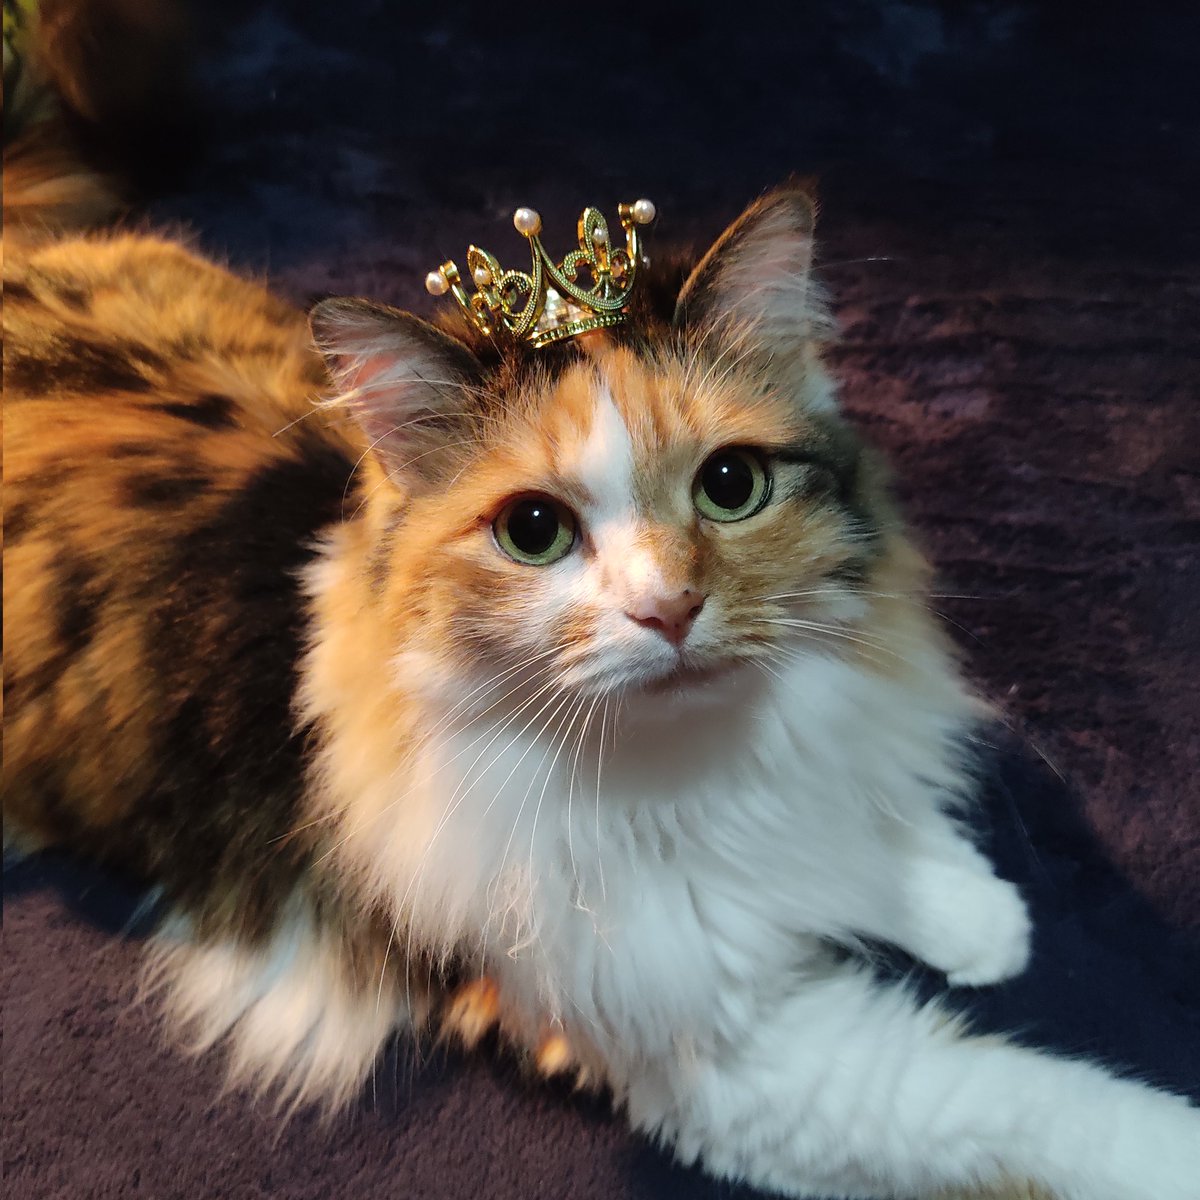 My princess ! 😍 #catlover #cats #catlove #catdad  #singlelife #princess